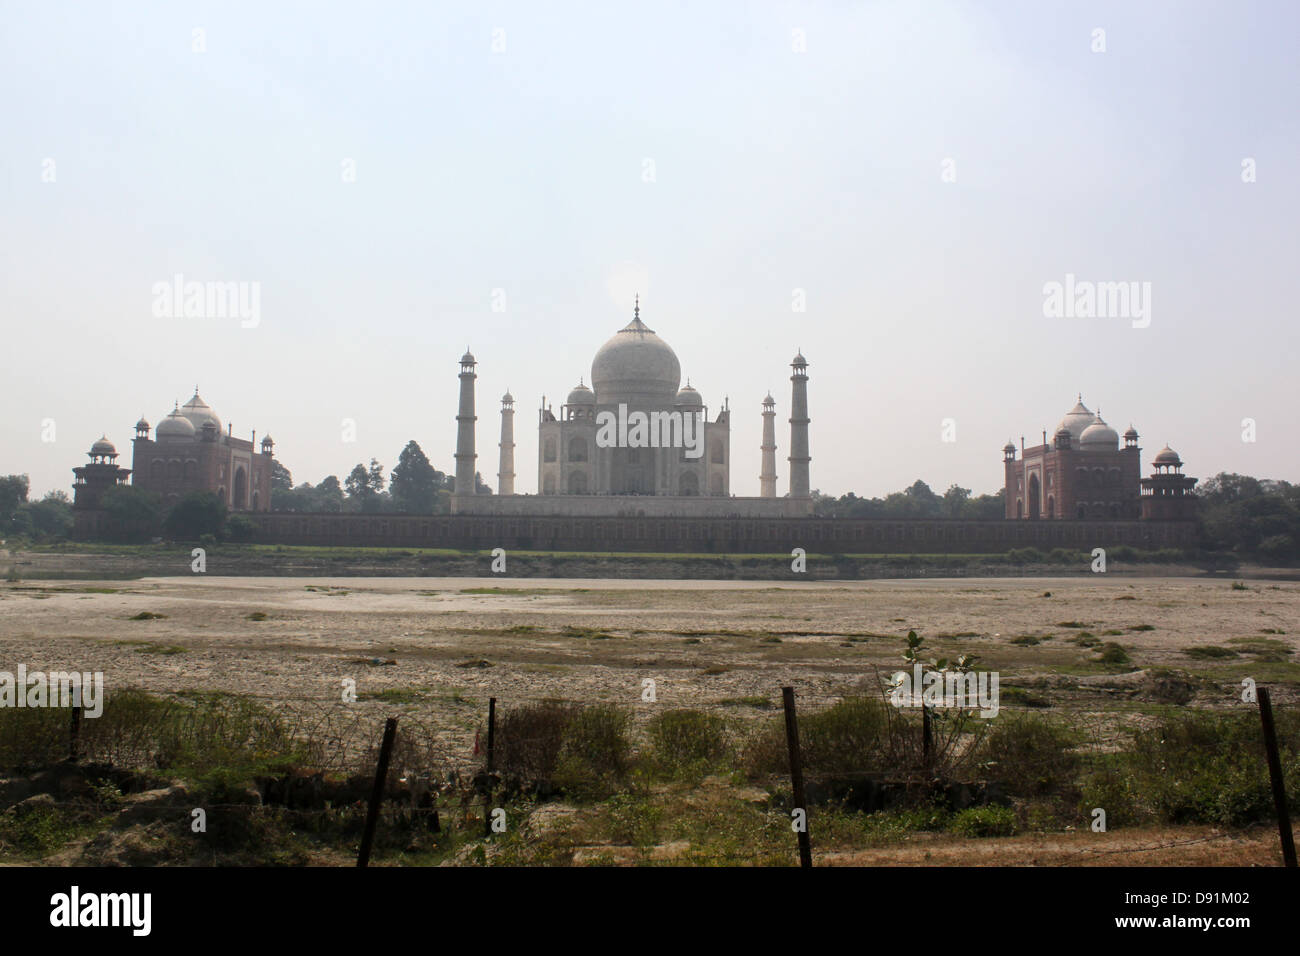 Mehtab Bagh Location Of Black Taj With Taj Mahal In Background On